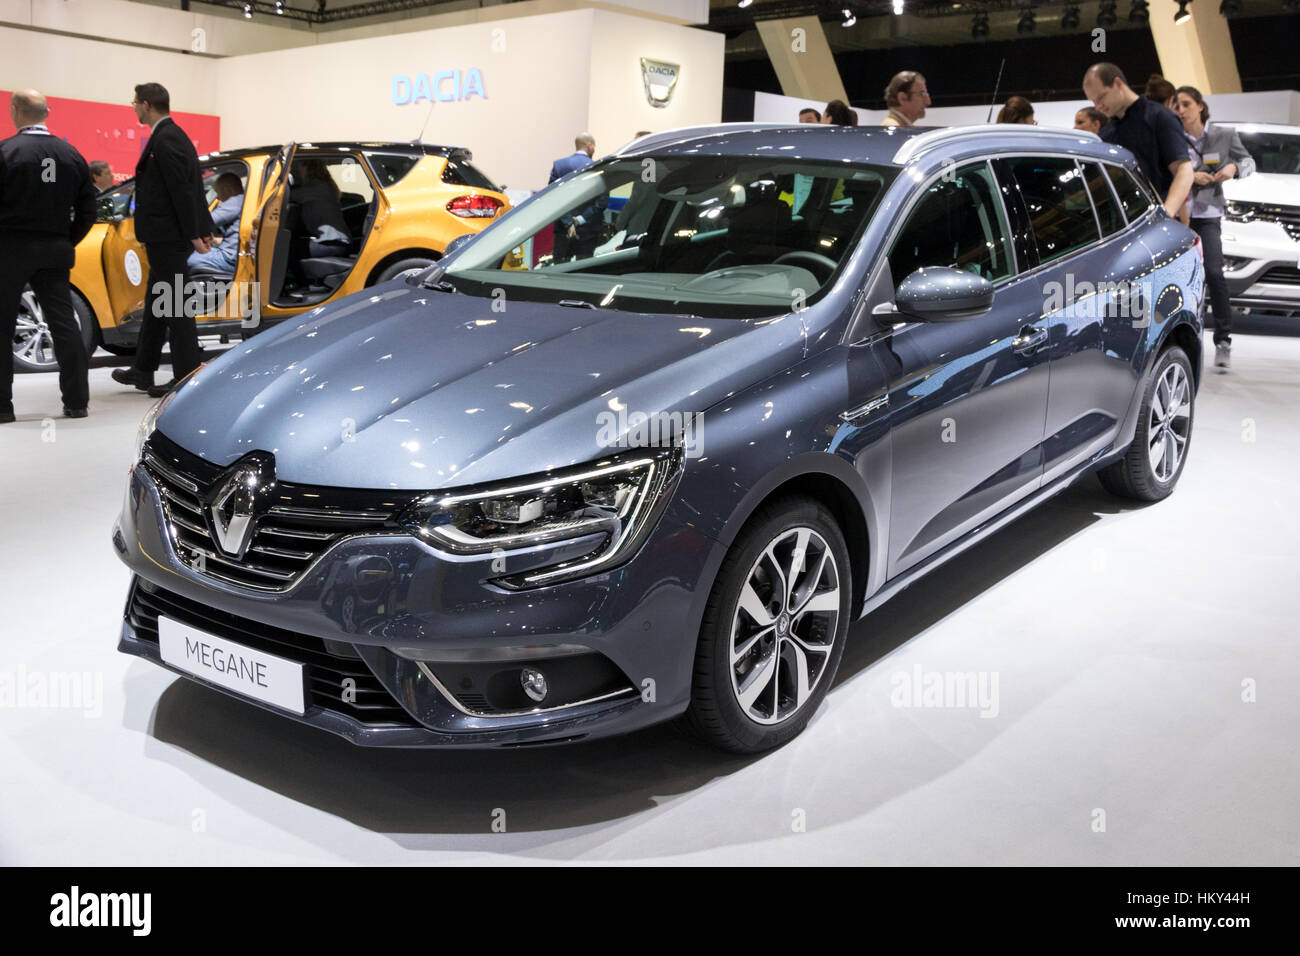 Bruxelles - Jan 19, 2017: Renault Megane presso il Motor Show di Bruxelles. Foto Stock